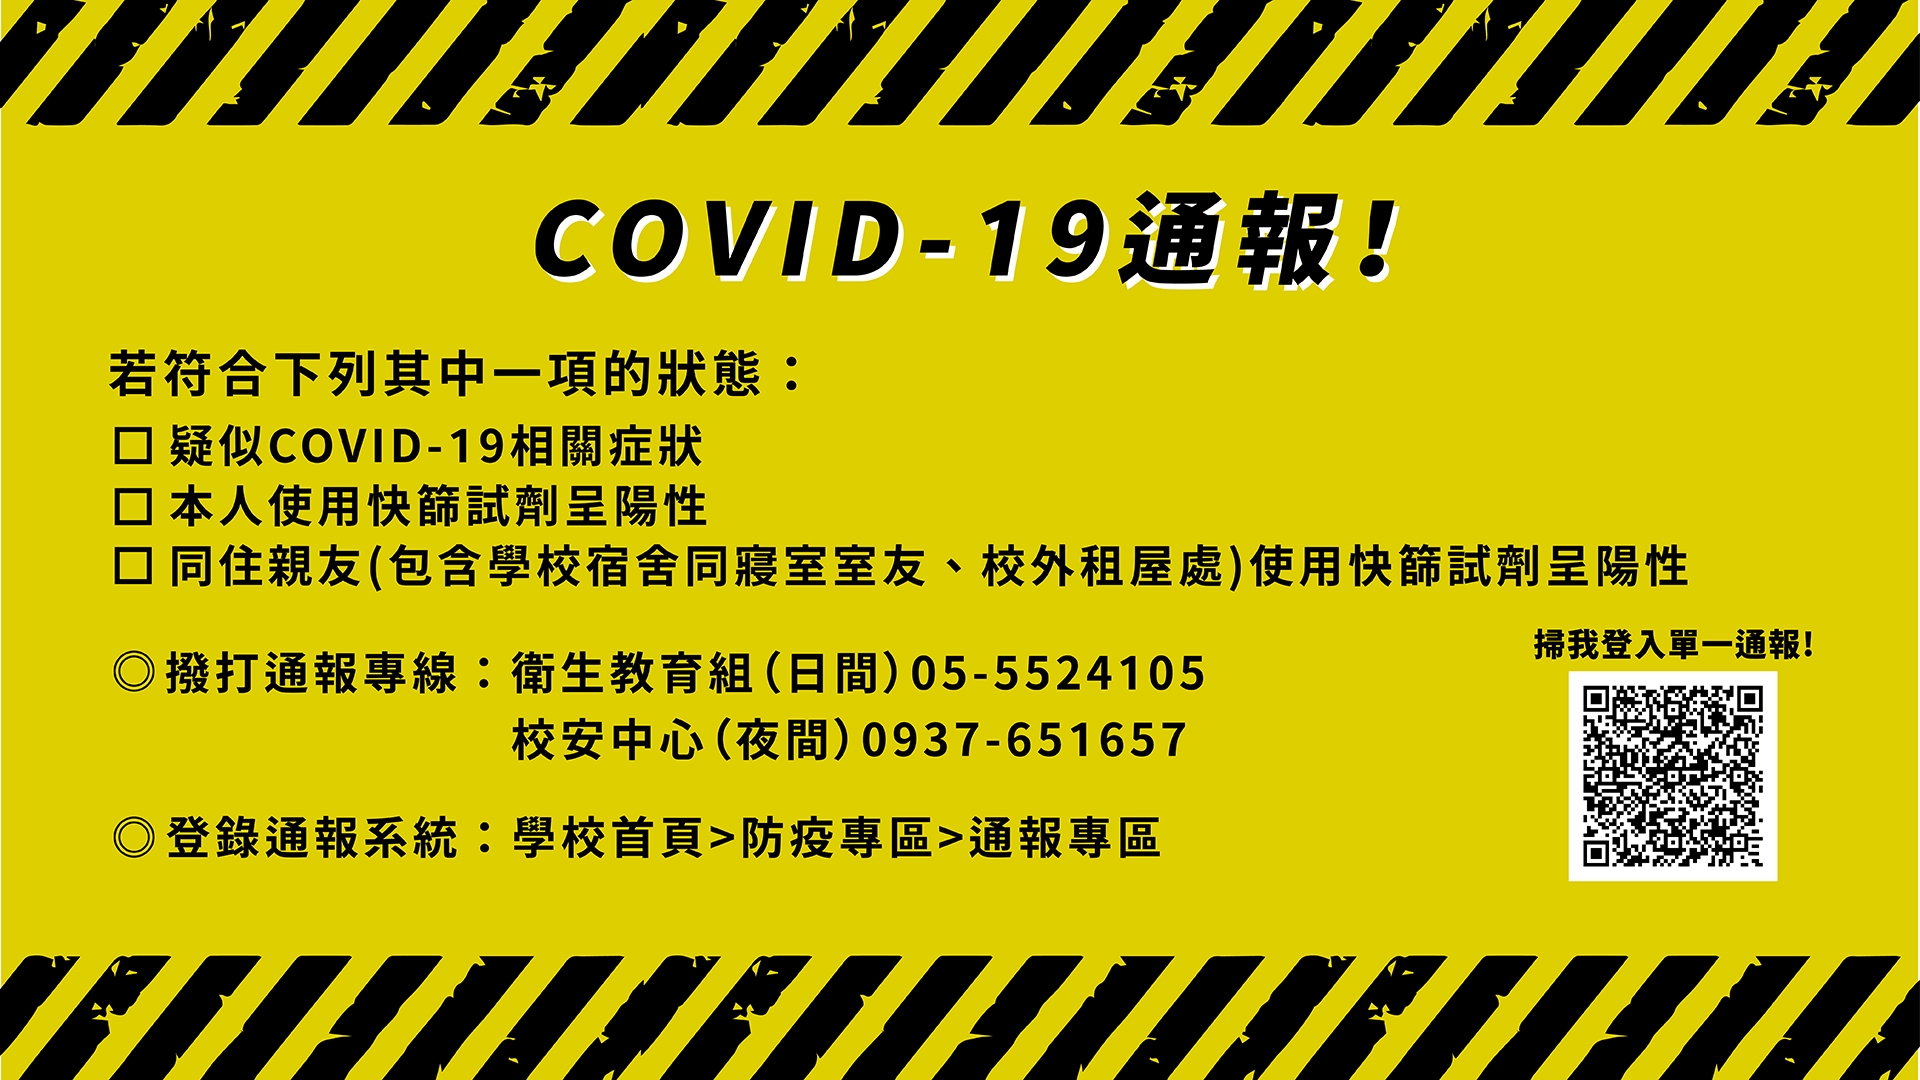 ⚠️ COVID-19通報 ⚠️